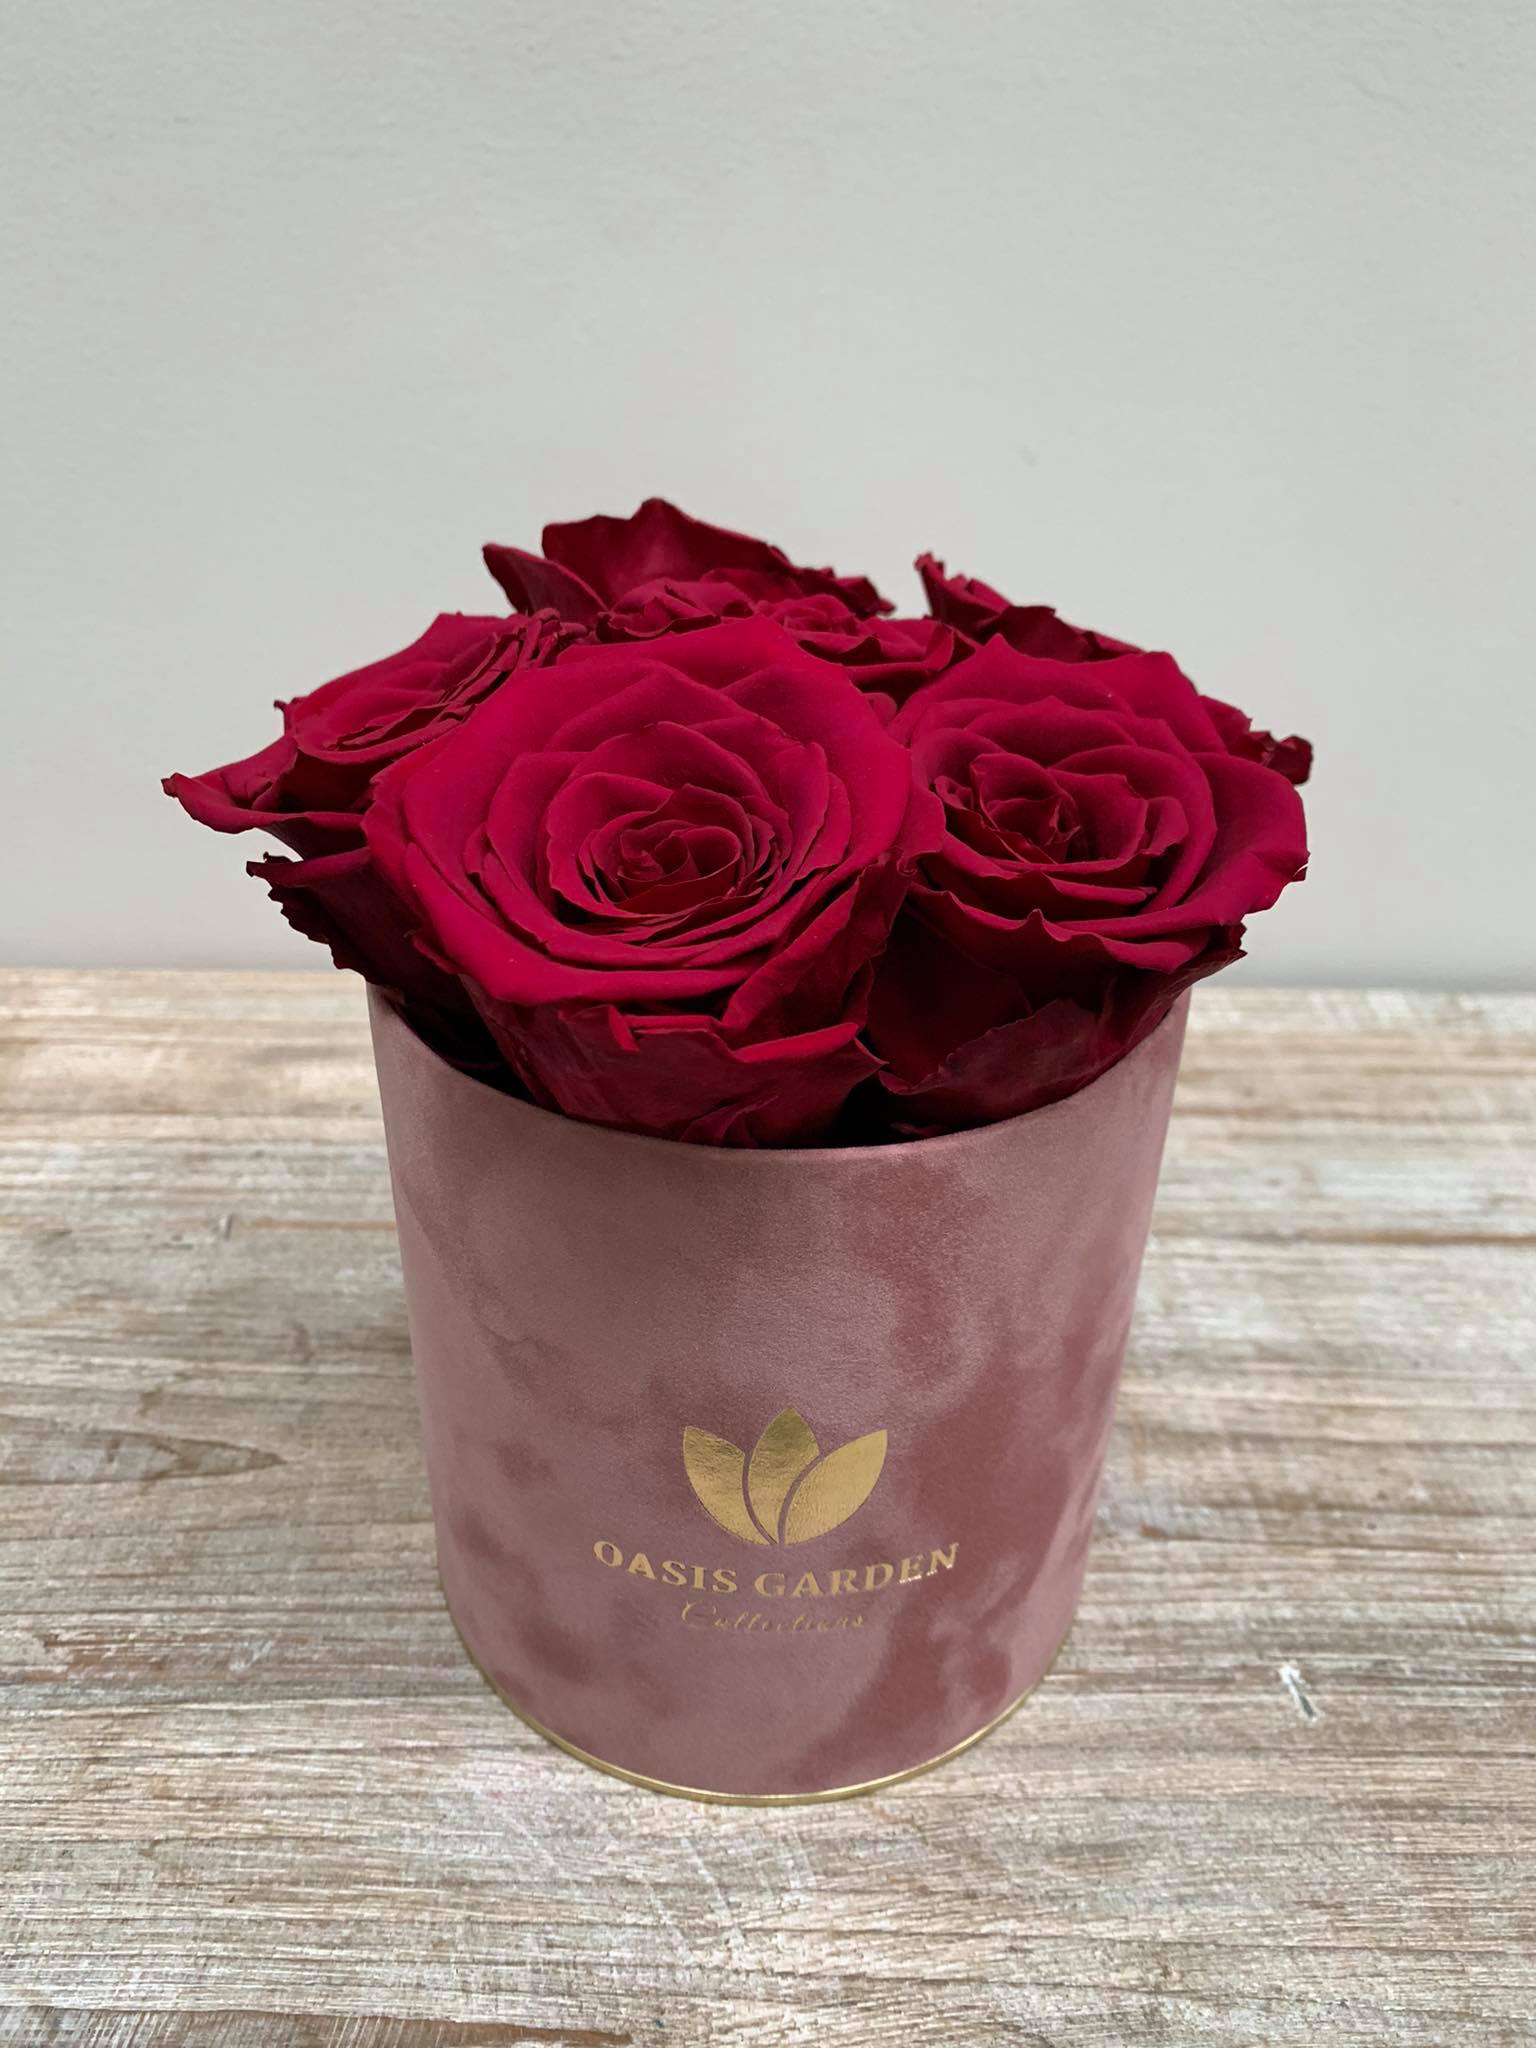 kaart Specialist Krachtig Flowerbox eeuwige rozen | Oasis Garden by Suenaert: cadeau